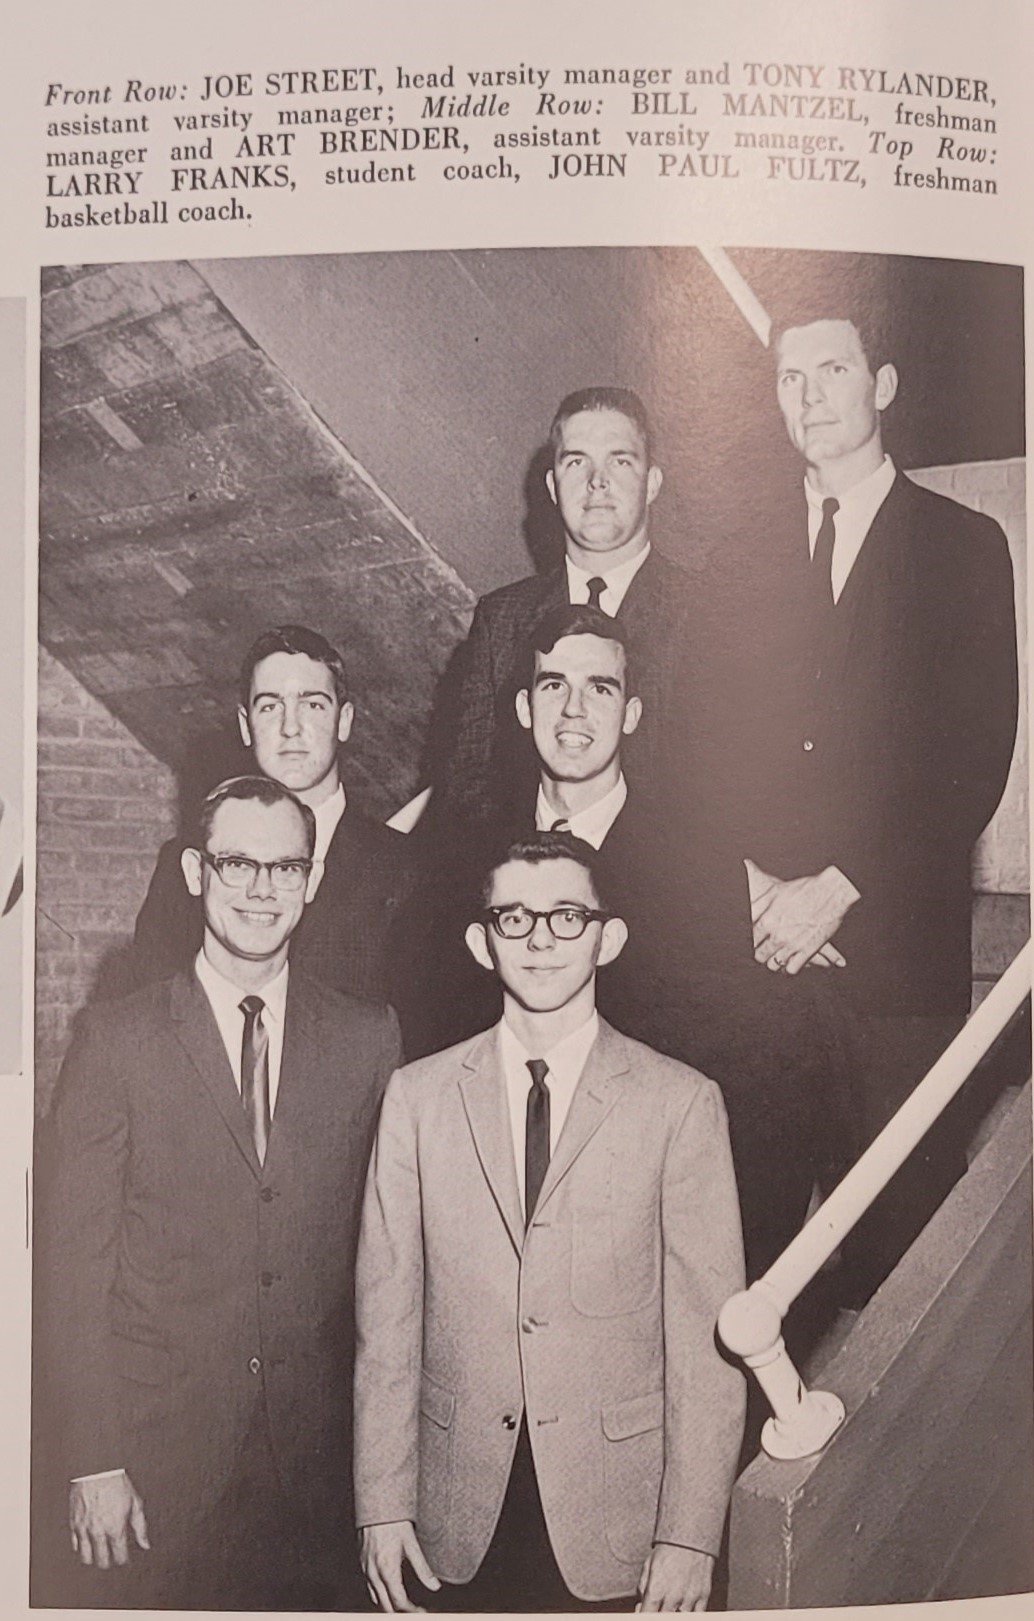  1965 basketball managers  front- Joe Street, Tony Rylander, middle- Bill Mantzel, Art Brenden, top - Larry Franks student coach, John Fultz- freshman coach  